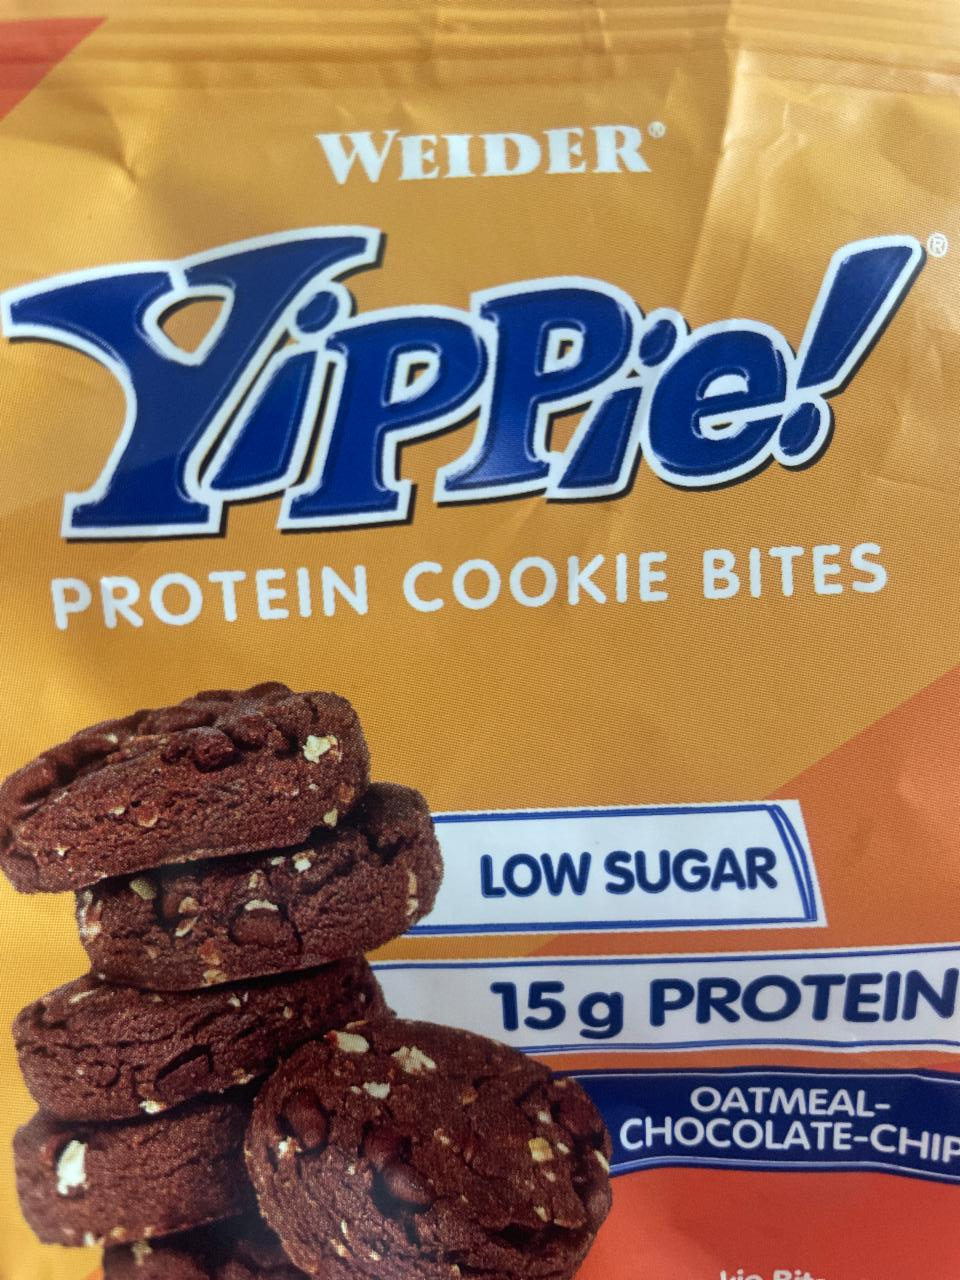 Fotografie - Yippie! Protein Cookie Bites Oatmeal-Chocolate Chip Weider